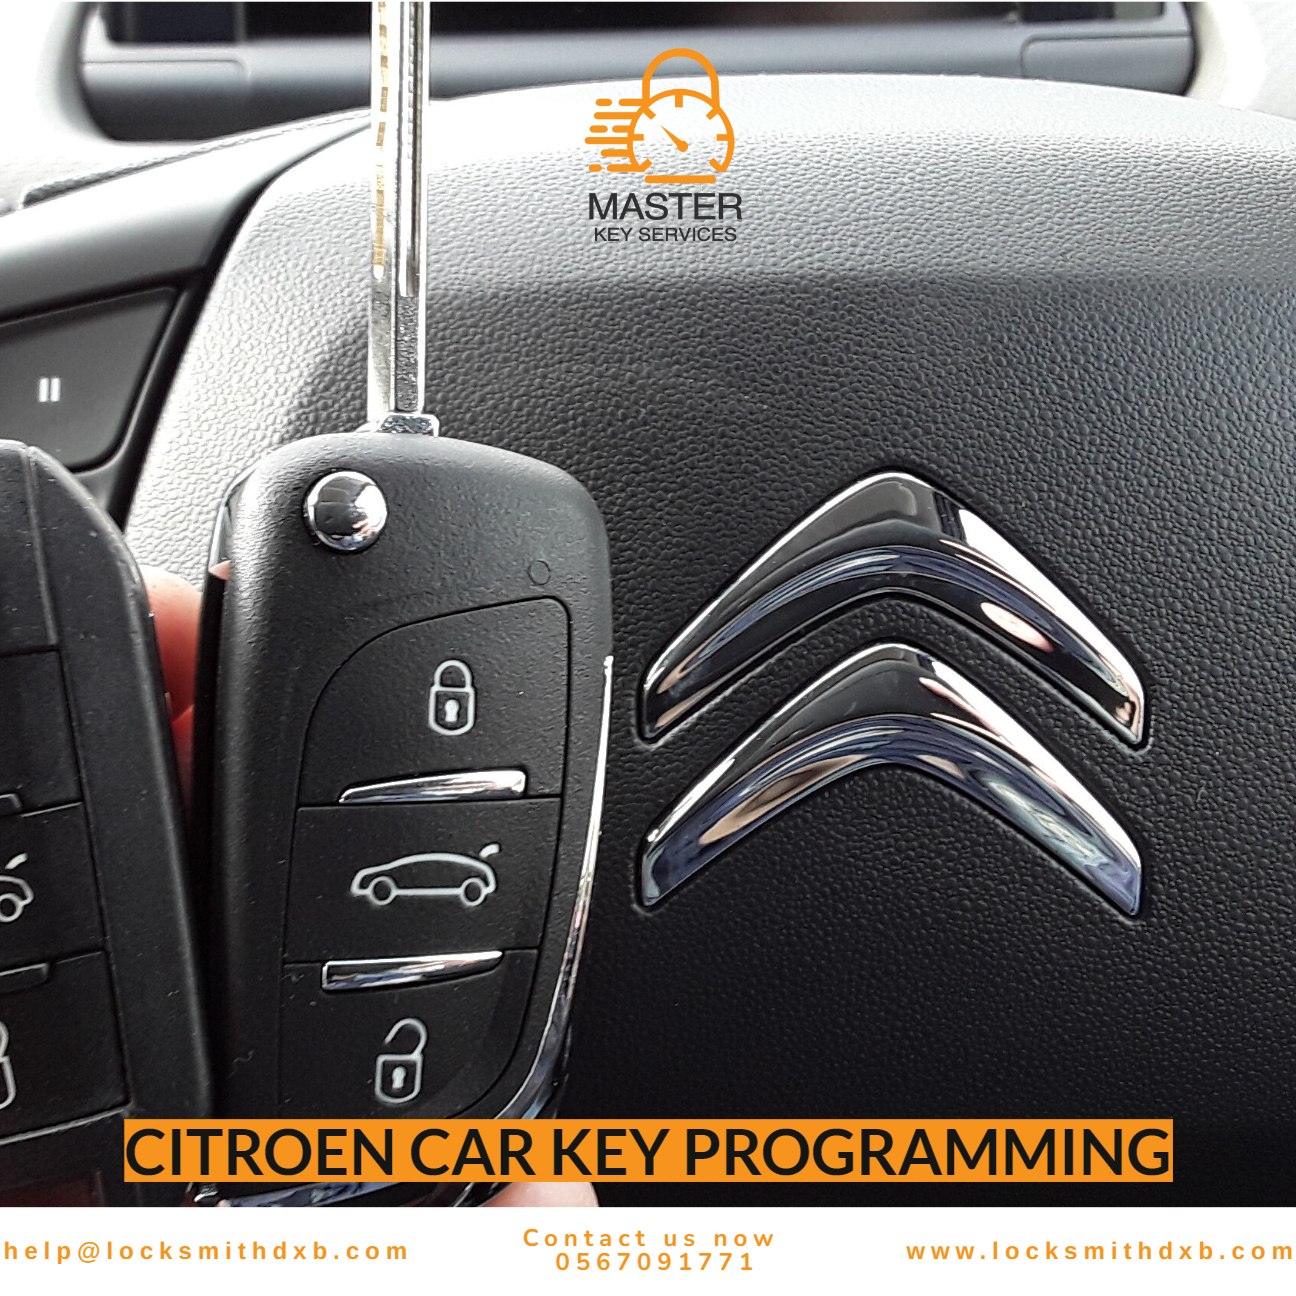 CITROEN car key programming